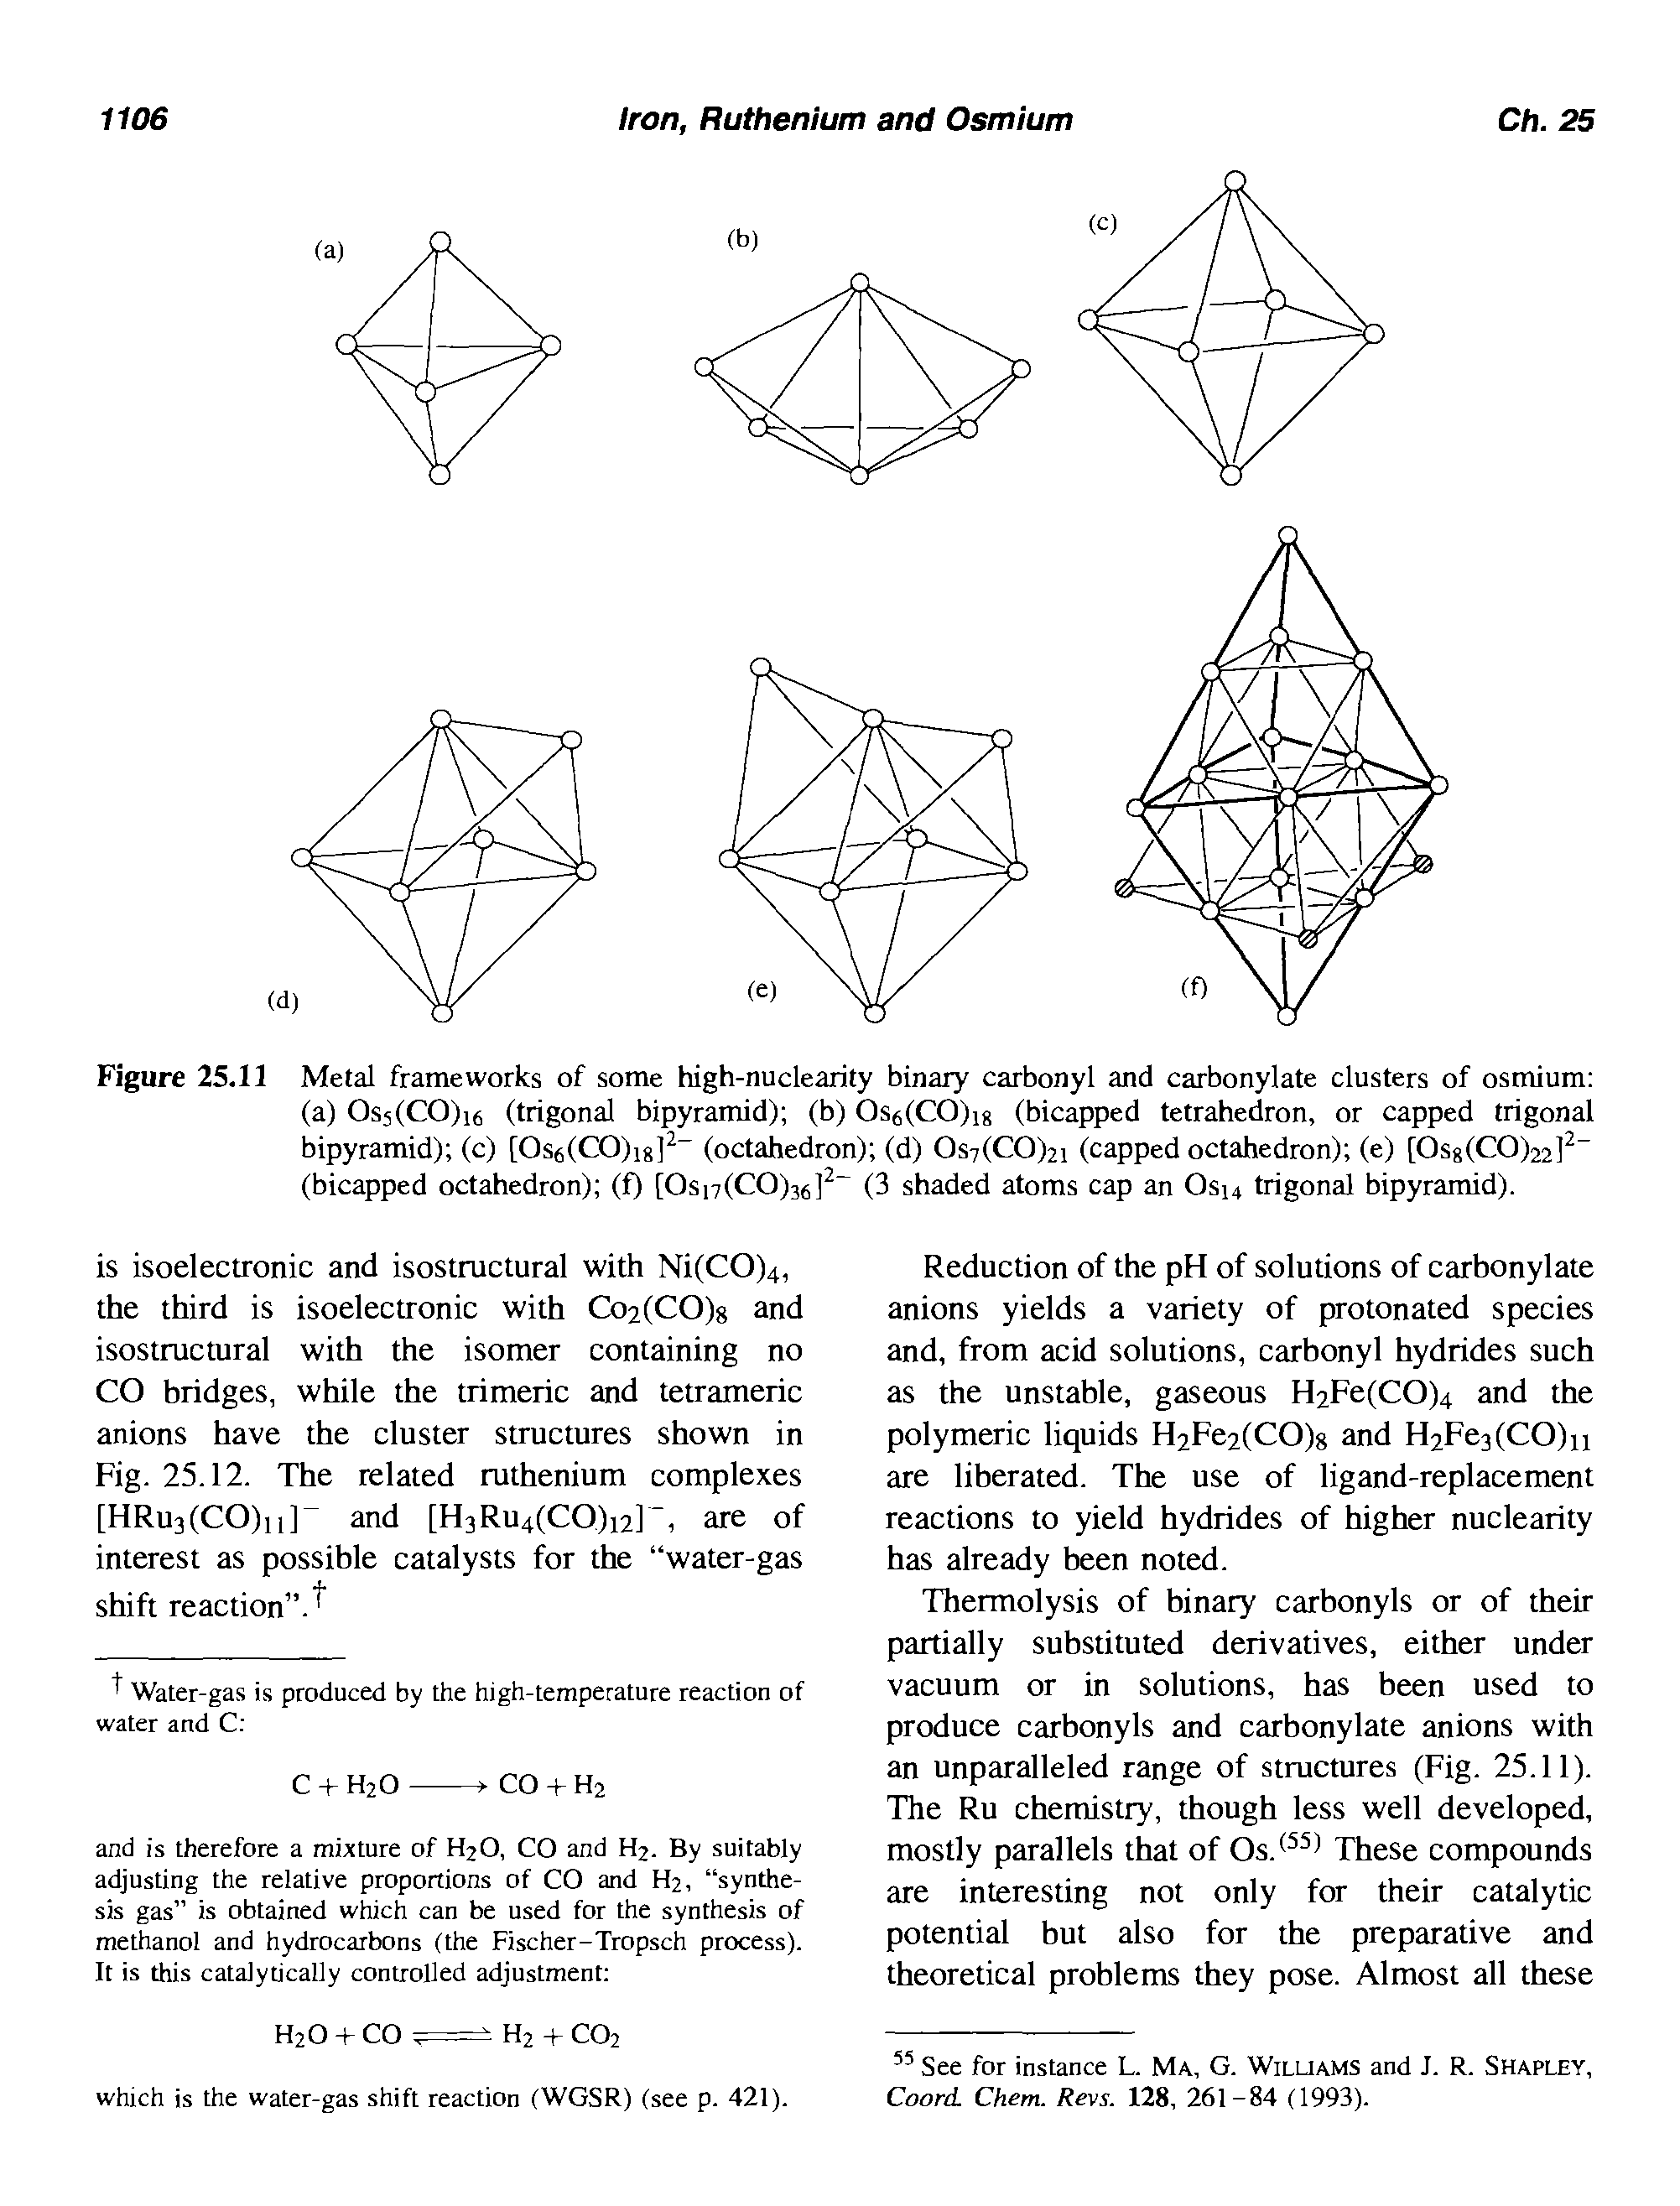 Figure 25.11 Metal frameworks of some high-nuclearity binary carbonyl and carbonylate clusters of osmium (a) Os5(CO)i6 (trigonal bipyramid) (b) Os6(CO)ig (bicapped tetrahedron, or capped trigonal bipyramid) (c) [Os6(CO)ig] (octahedron) (d) Os7(CO)2i (capped octahedron) (e) [Osg(CO)22] (bicapped octahedron) (f) [Osi7(CO)36] (3 shaded atoms cap an Osu trigonal bipyramid).